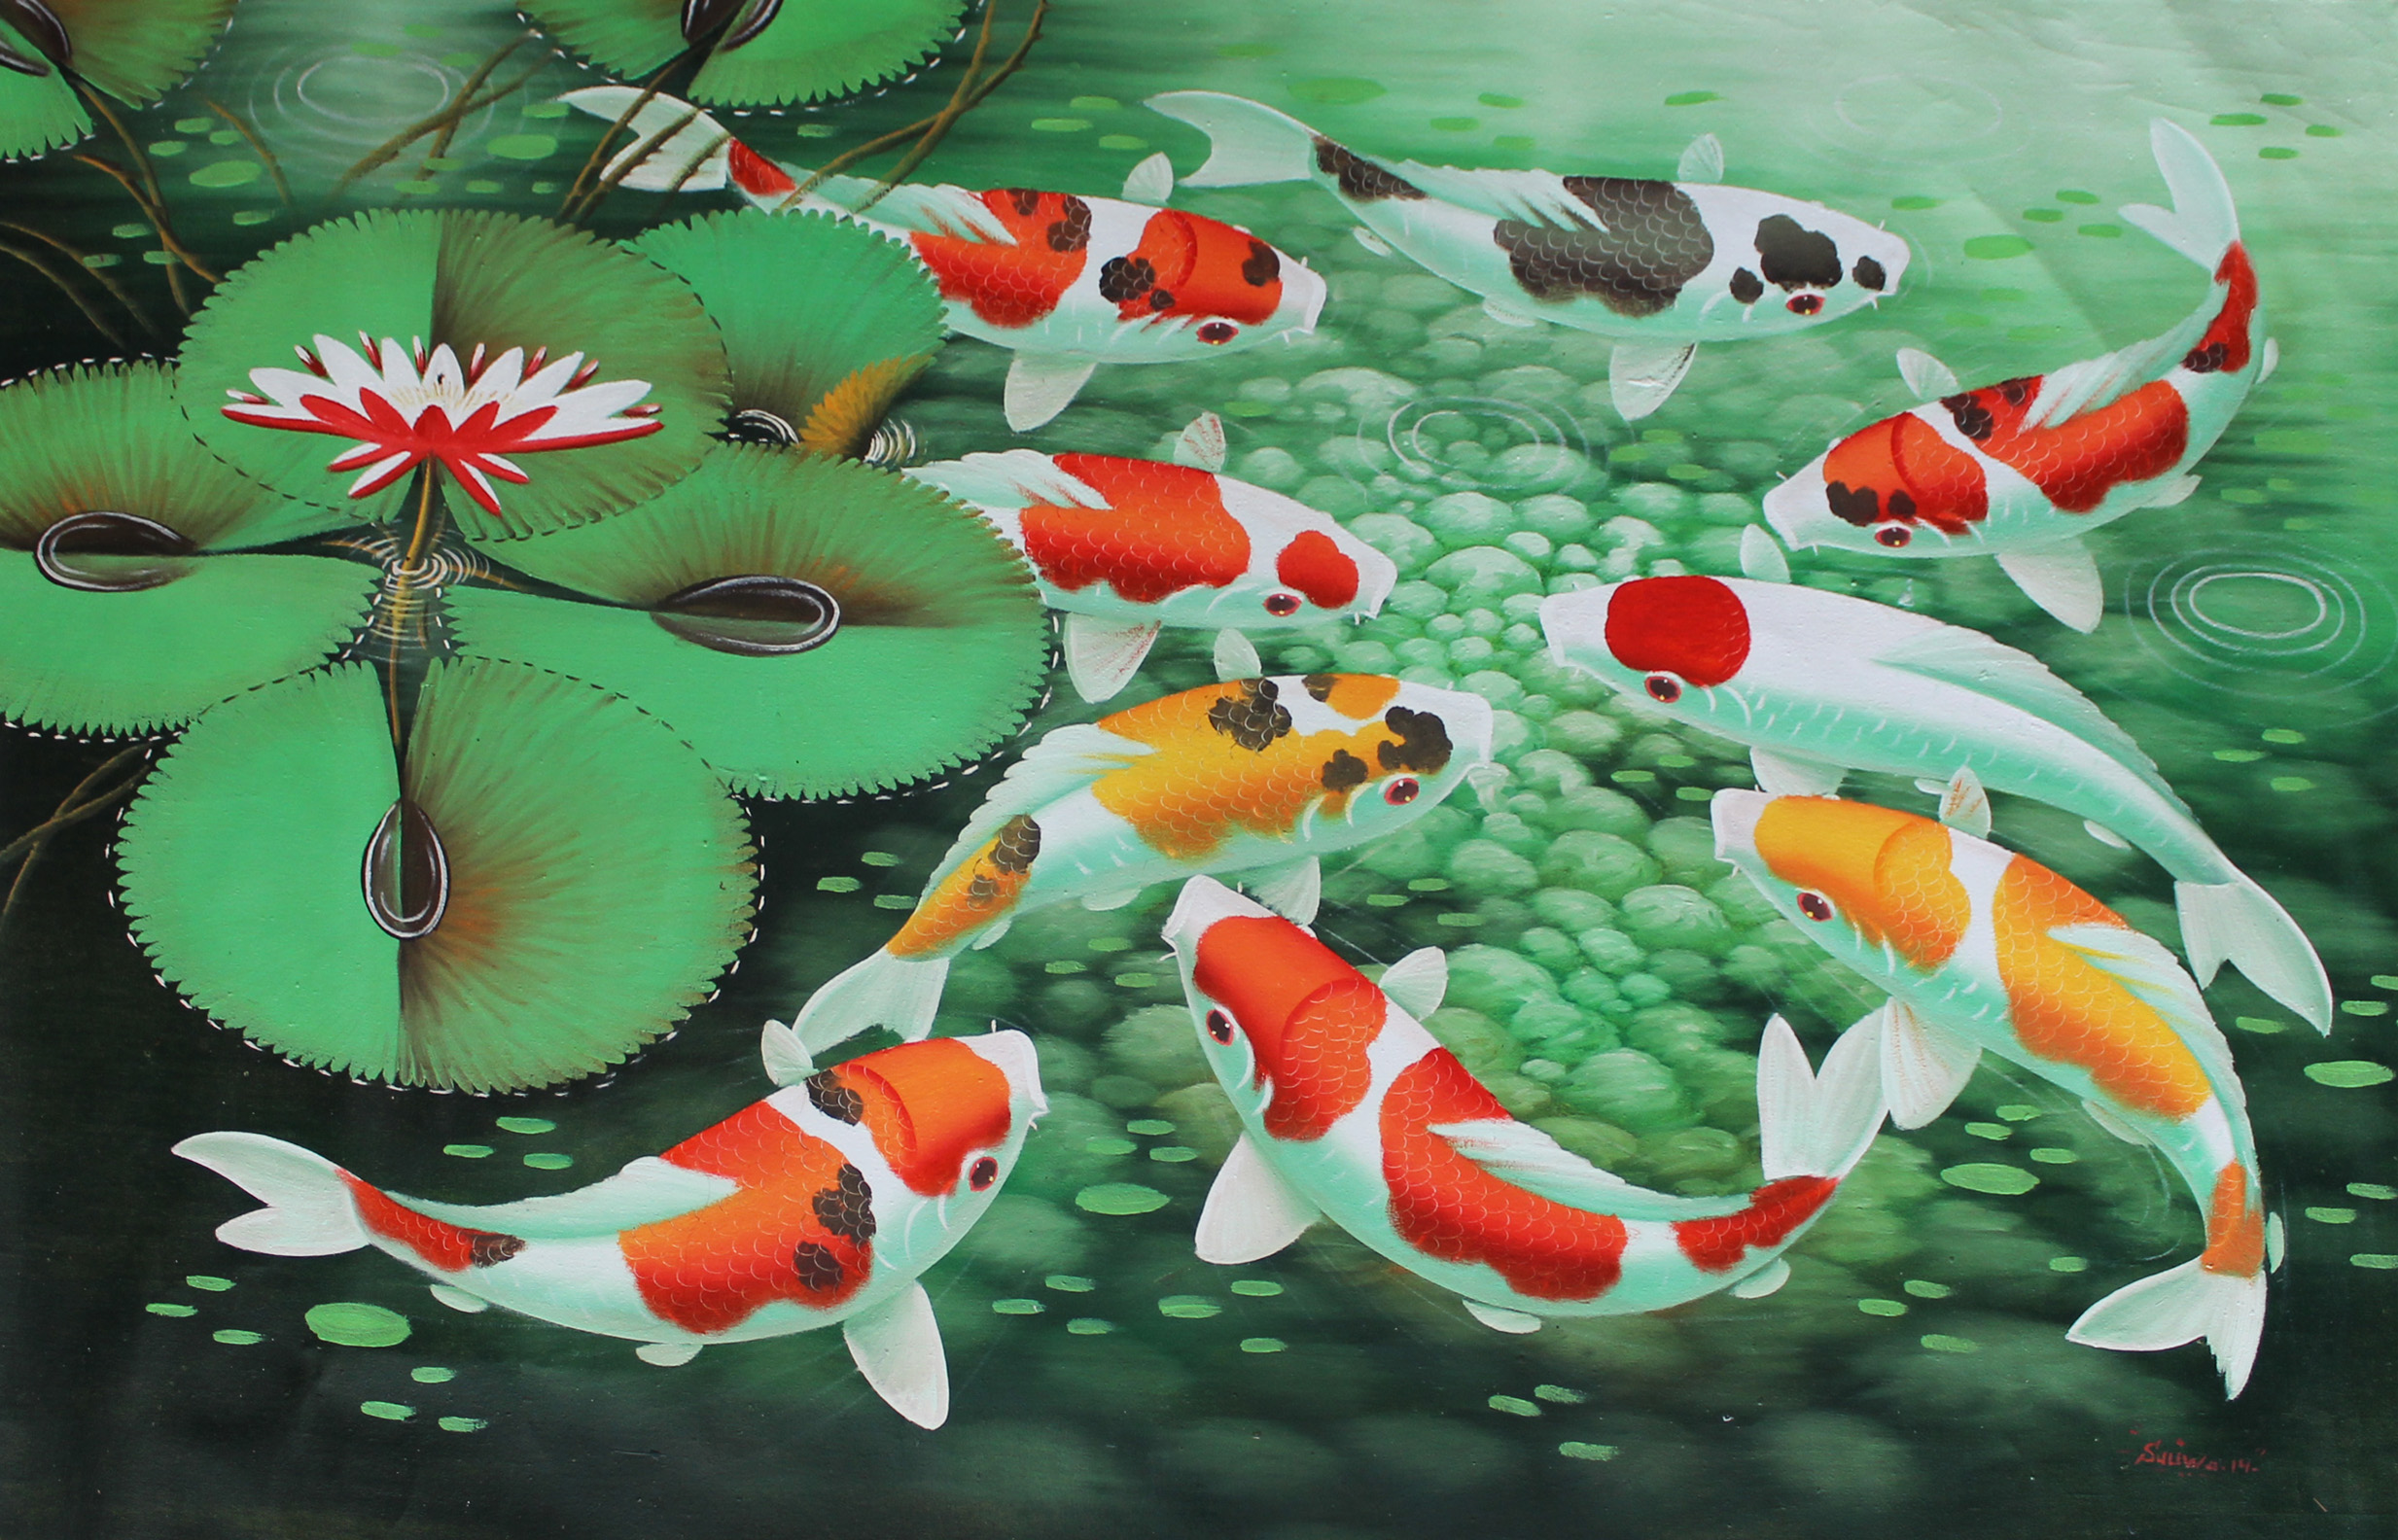 Koi Fish Painting Wallpaper 4 Asahi Fancy Koi, Inc - 9 Koi Fish Painting. 